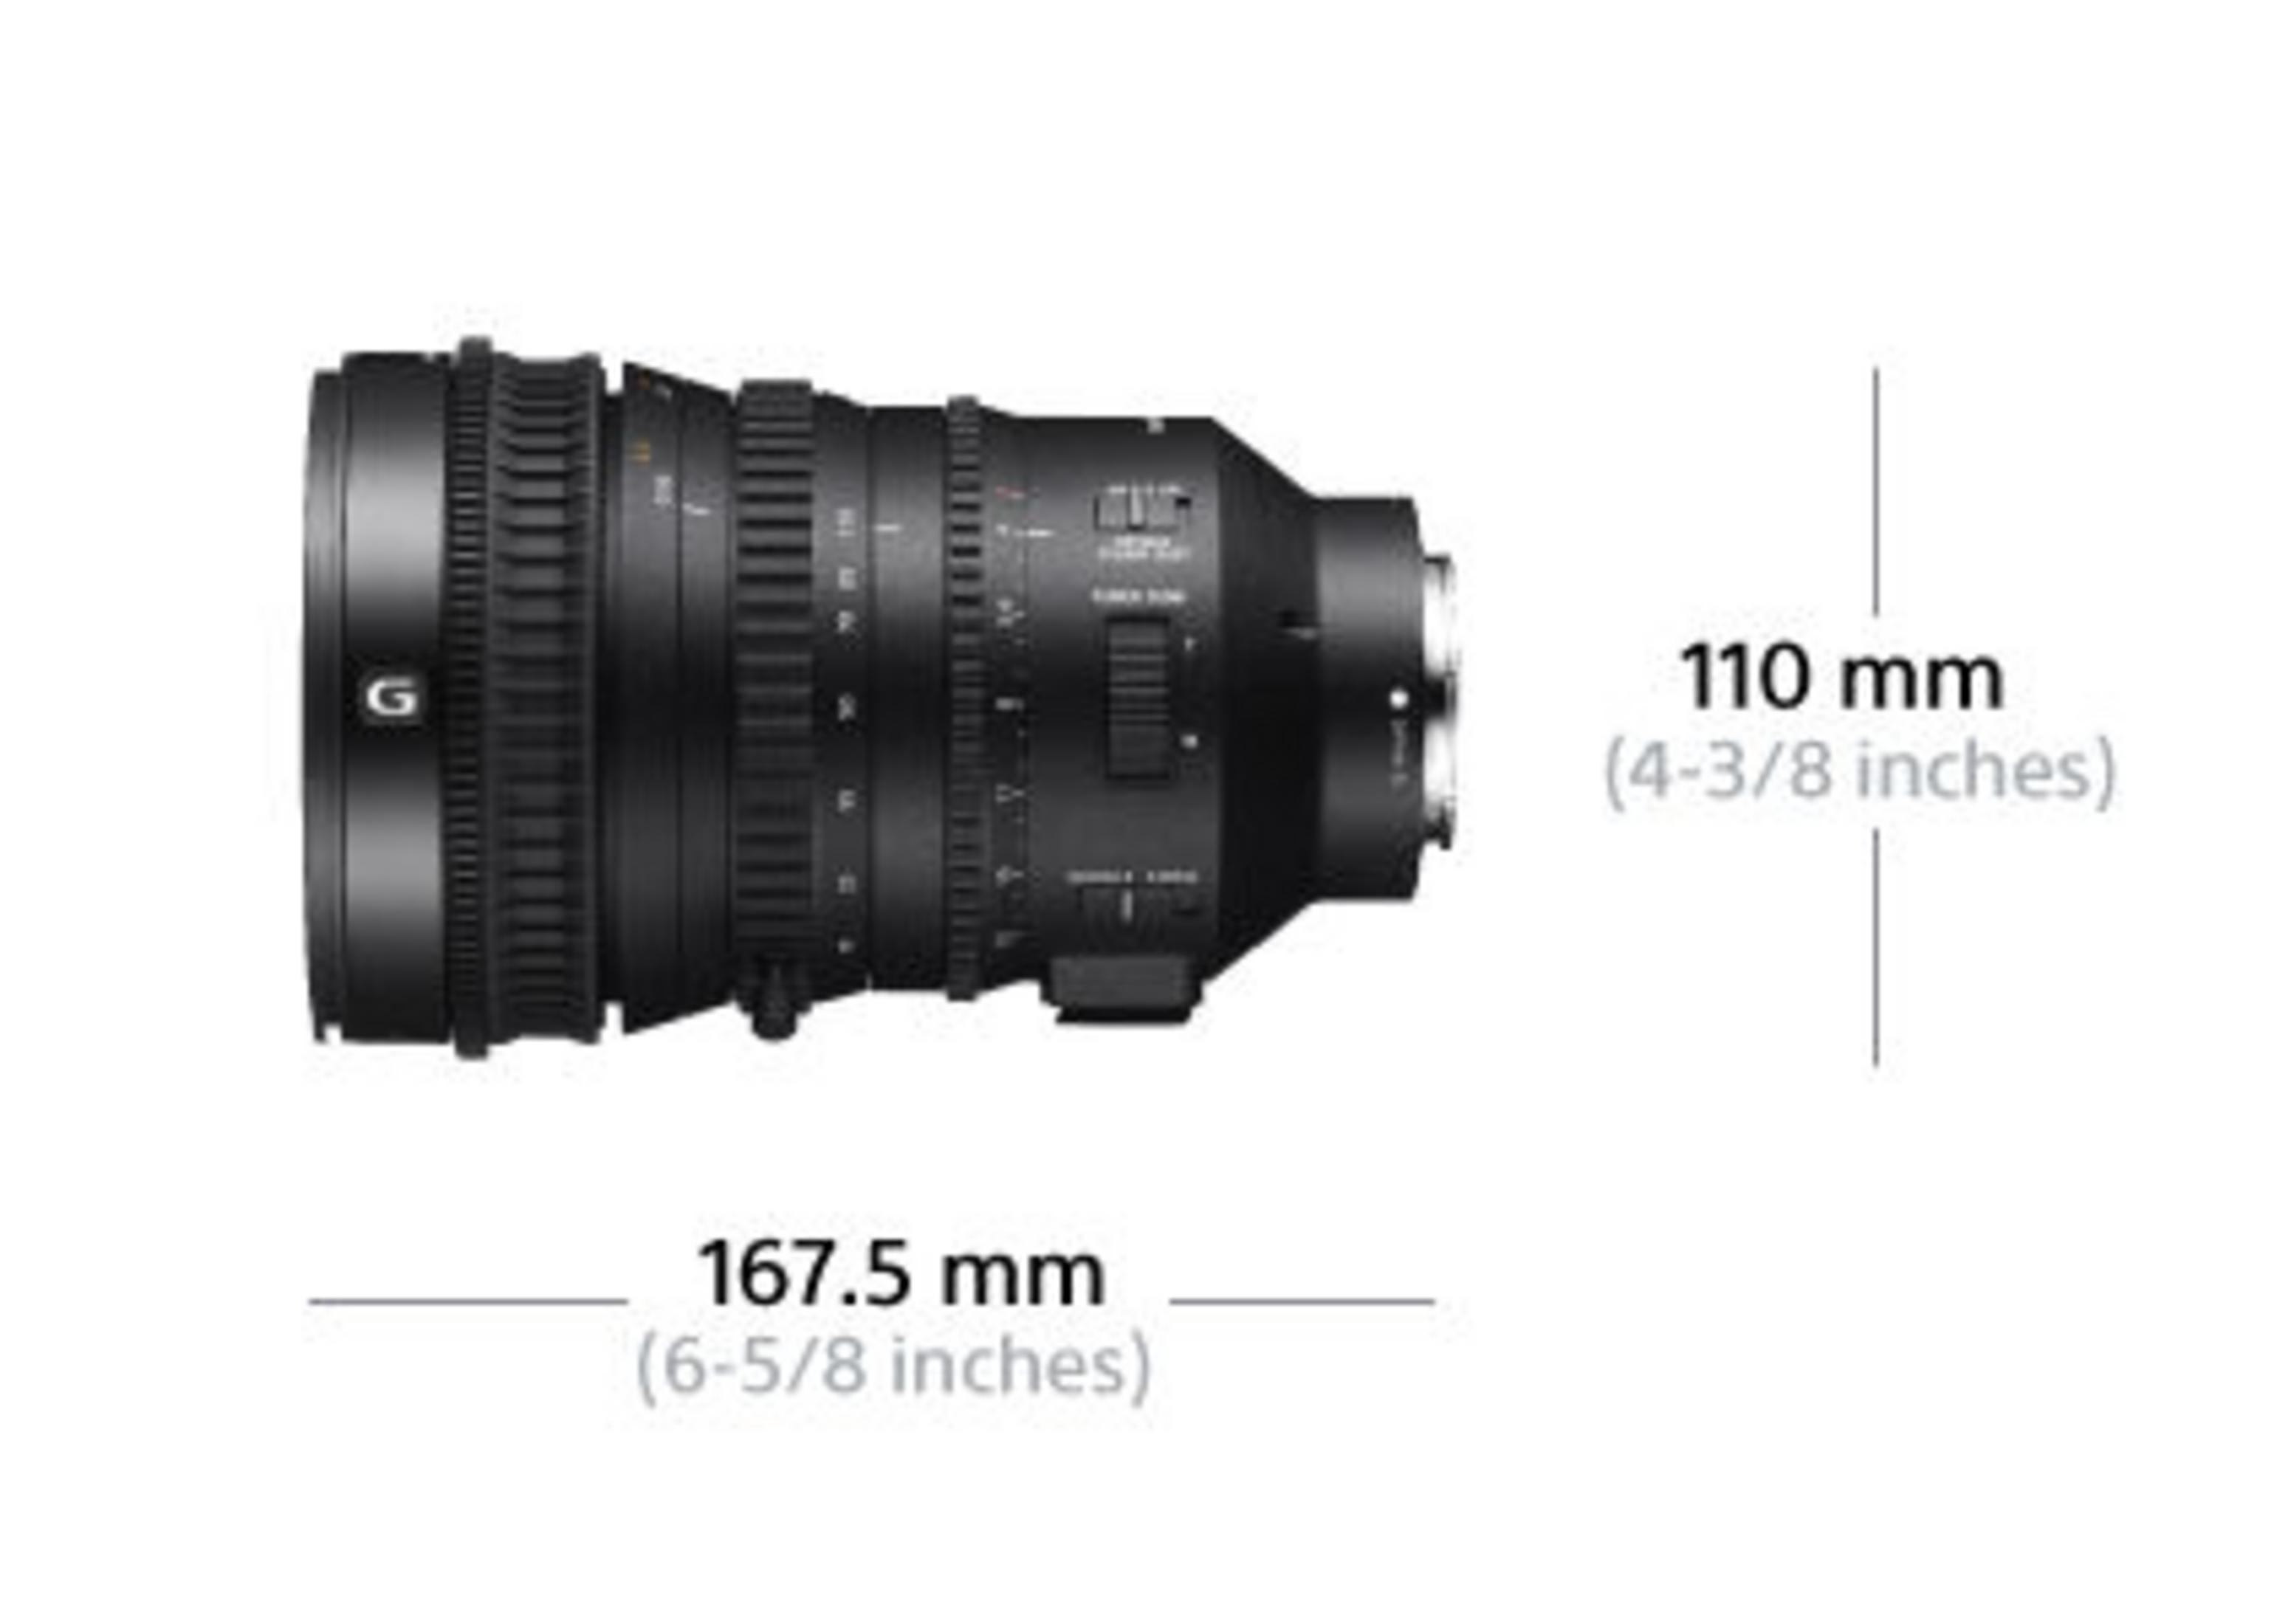 SONY SEL-P 18110 G 18-110MM (F4) - E-Mount, Sony f/4.0 110 POWERZOOM 18 G-OBJEKTI Blende, Circulare (Objektiv Schwarz) für mm mm G-Lens, OSS, DMR FE